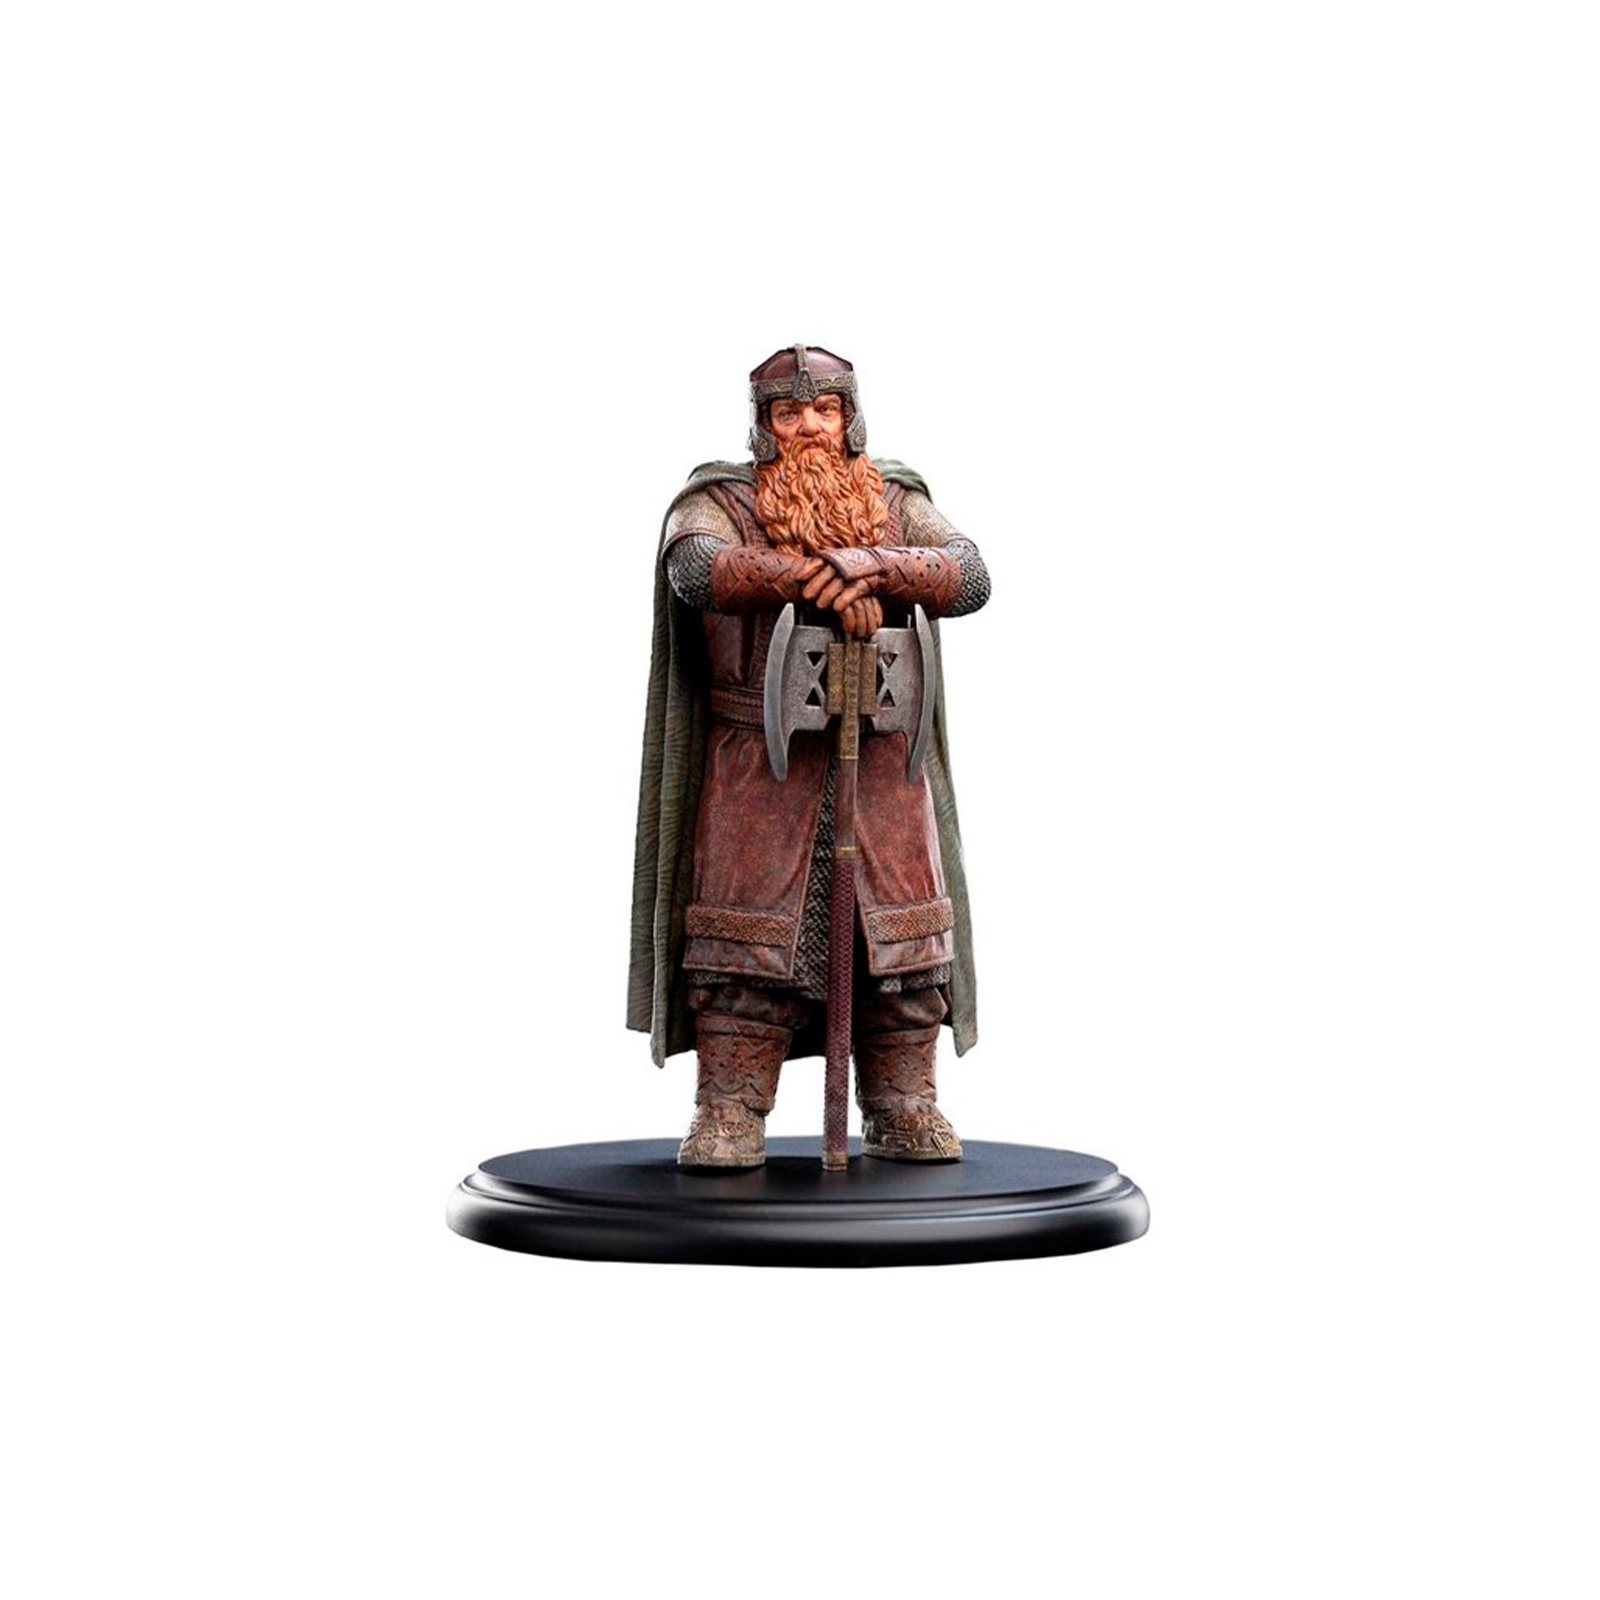 Статуетка Weta Workshop Lord Of The Rings Gimli (860103826)